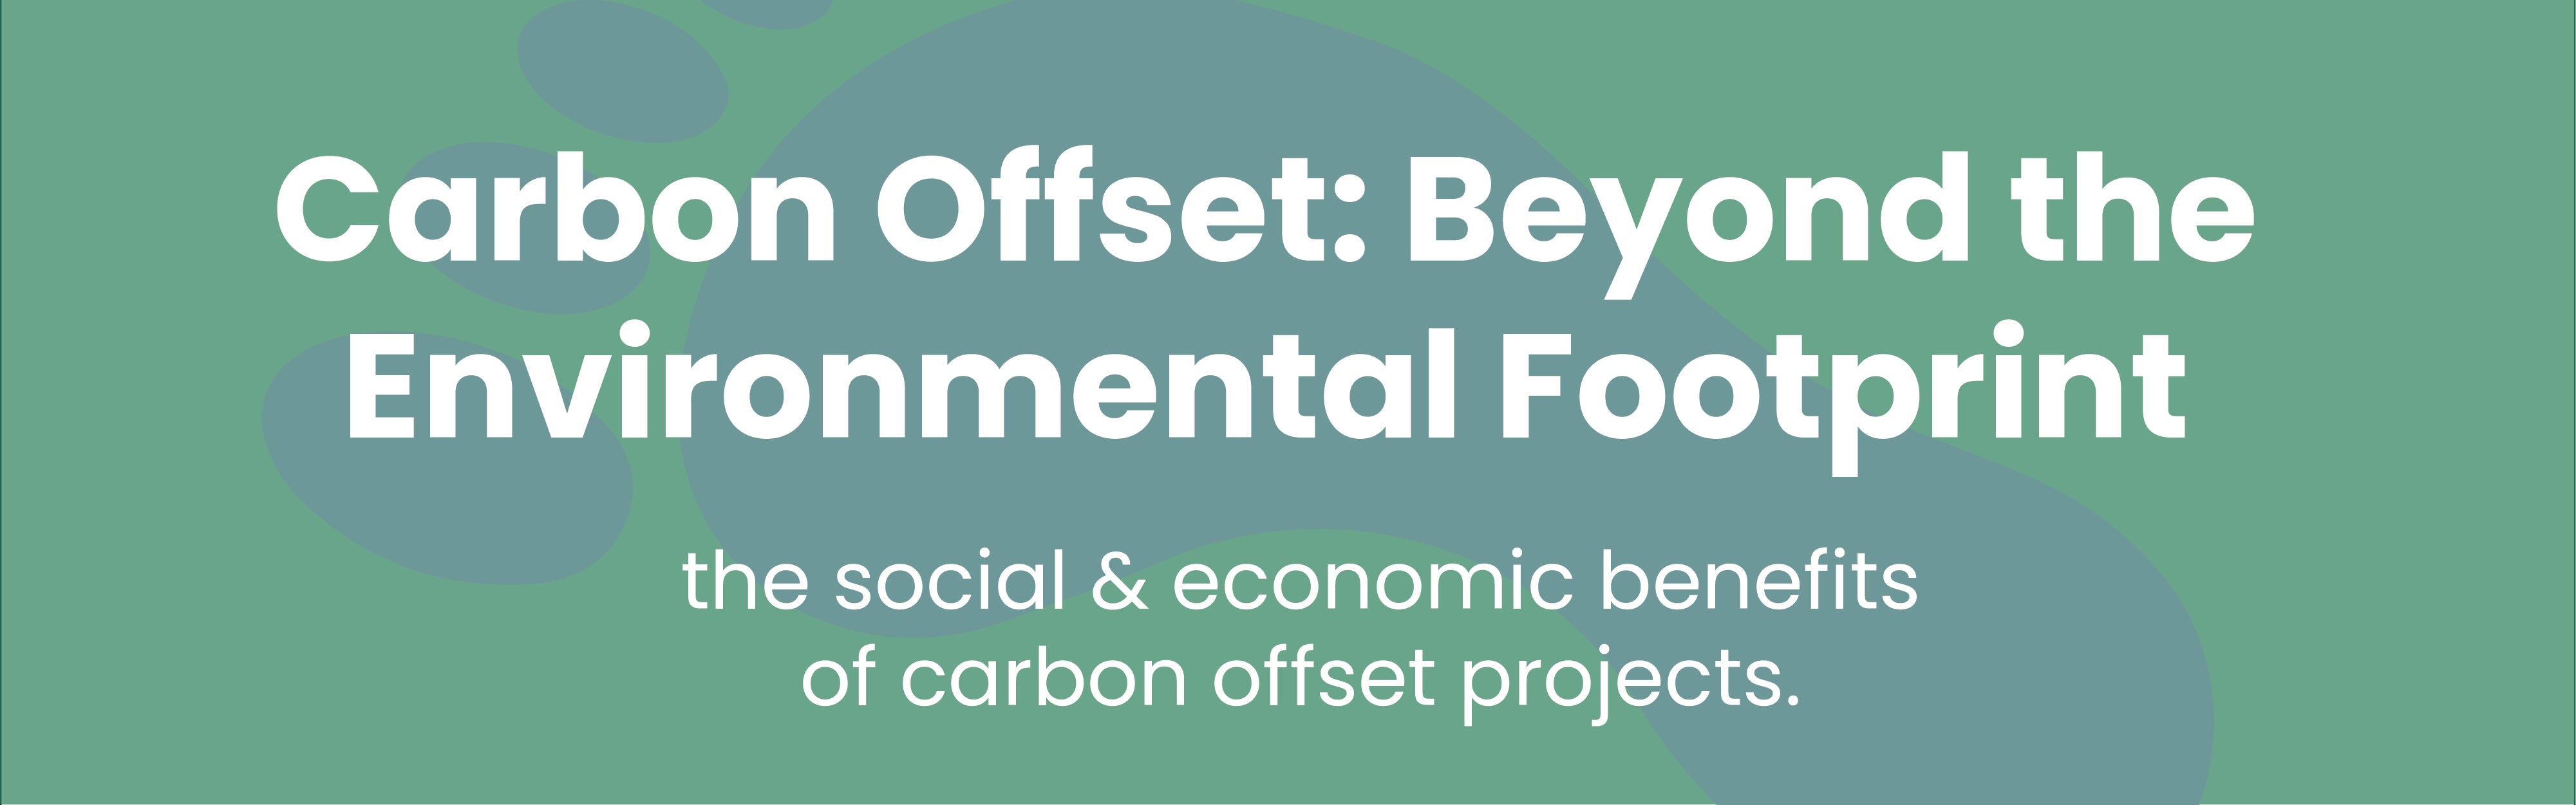 Carbon Offset: Beyond the Environmental Footprint